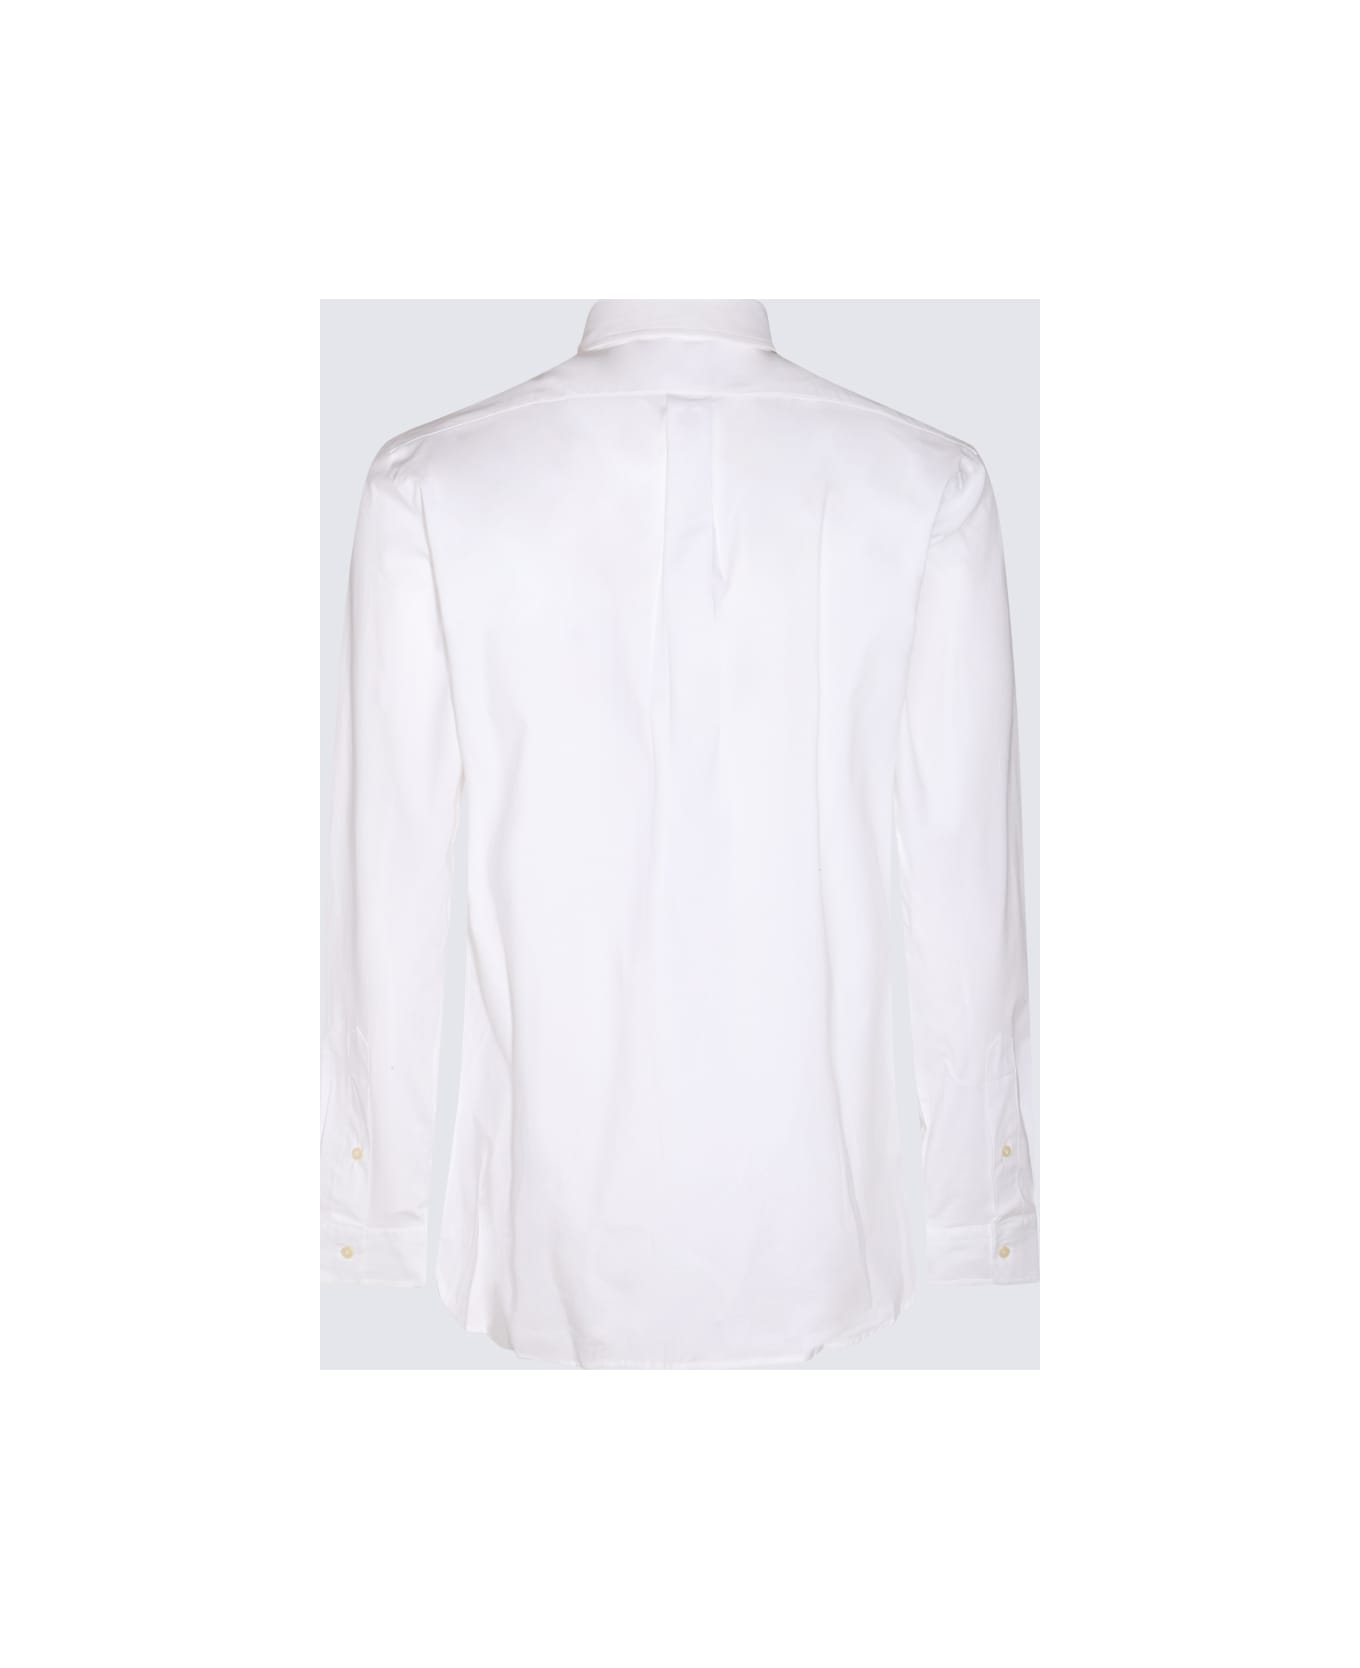 Polo Ralph Lauren White Cotton Shirt - White